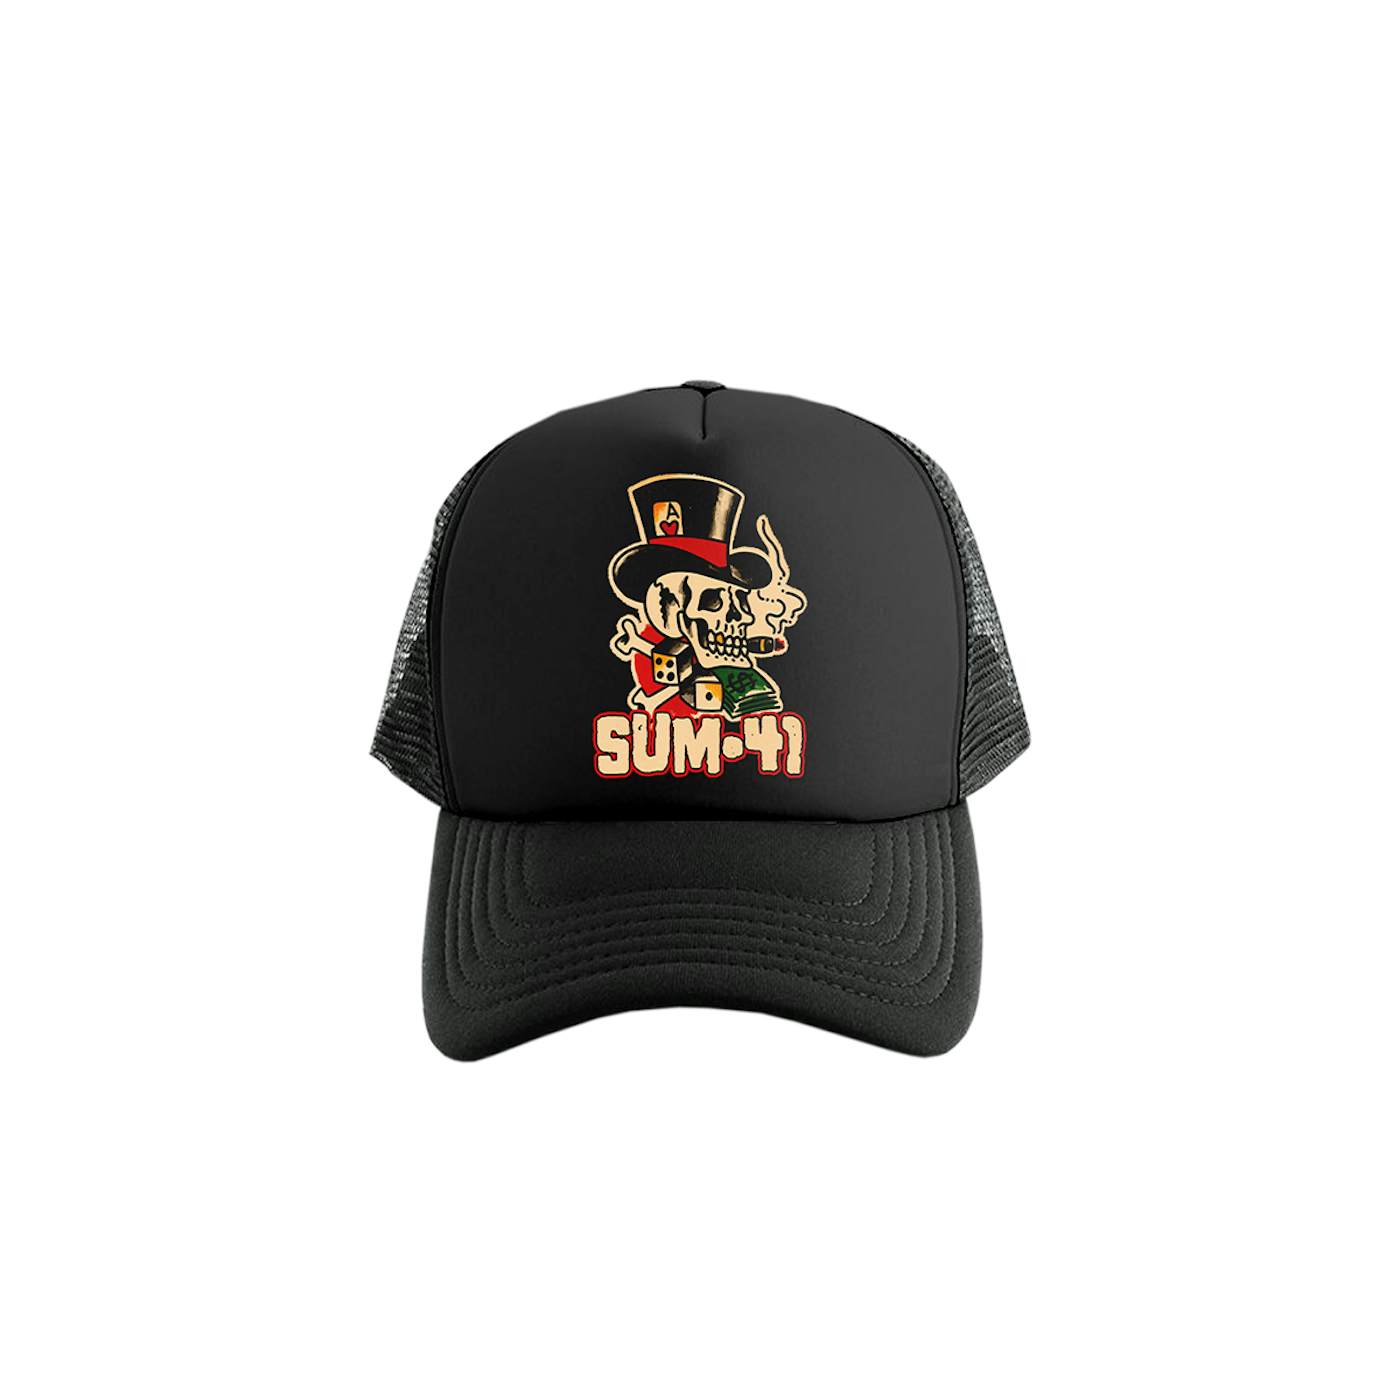 Sum 41 Smoking Skull Trucker Hat